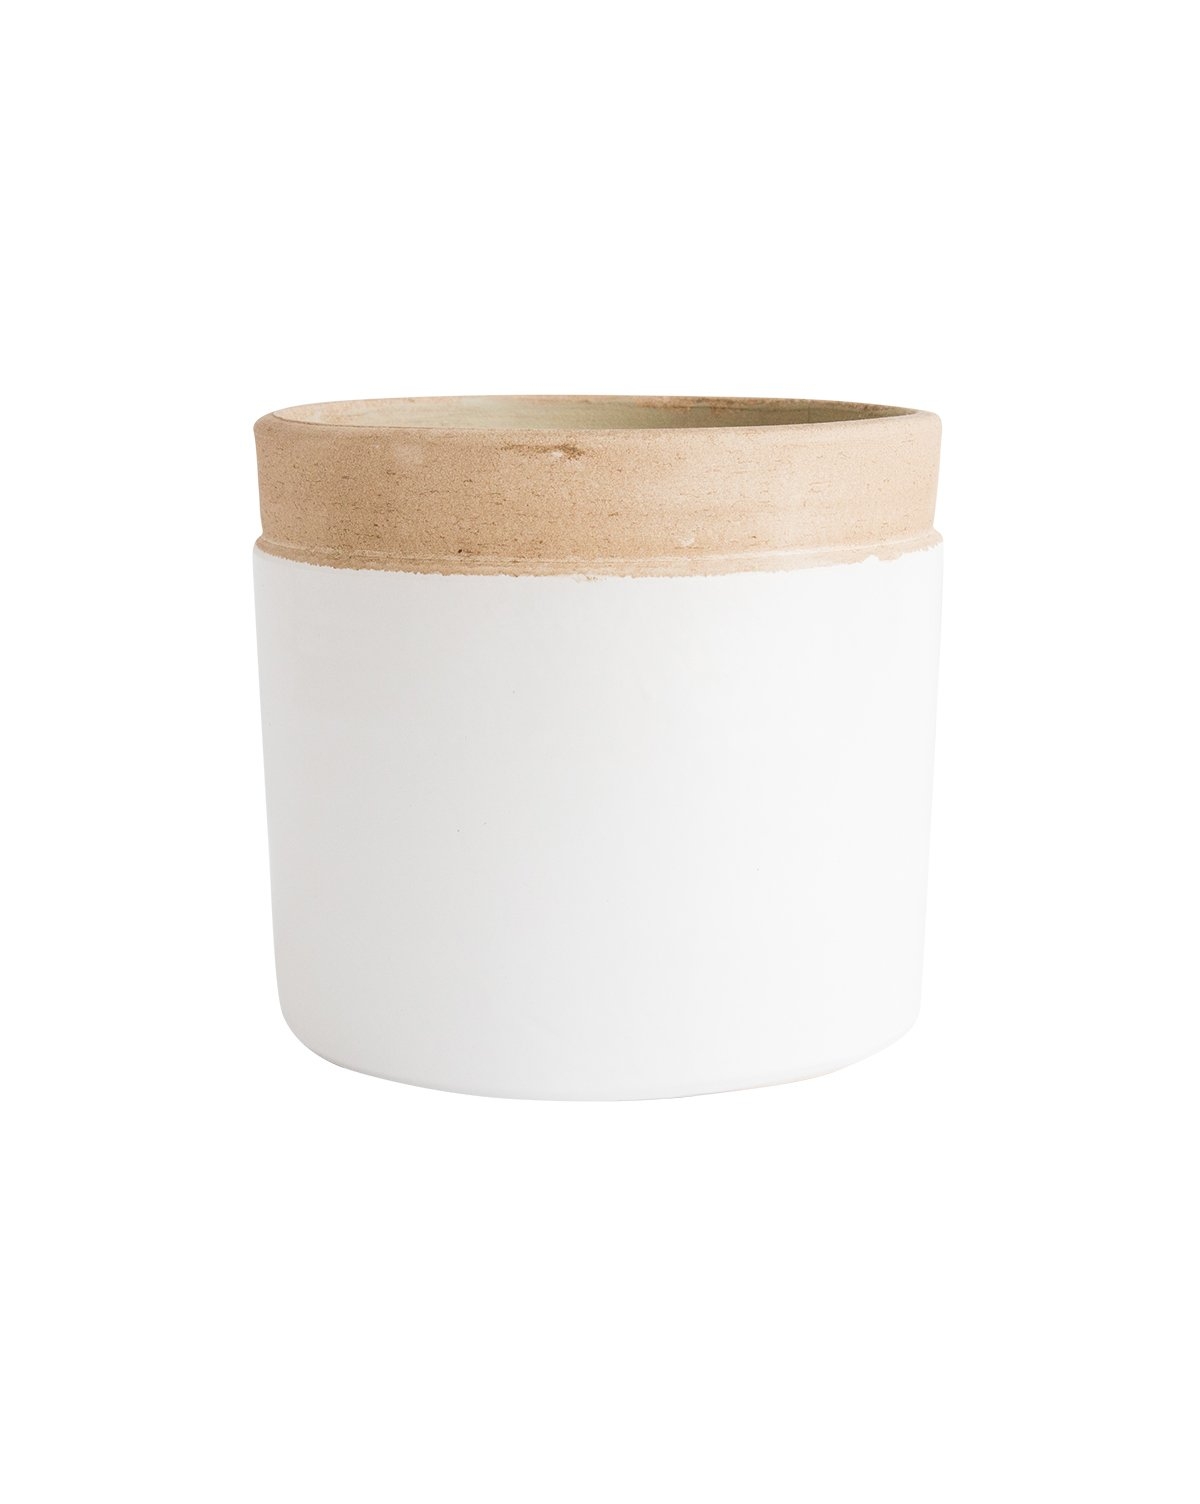 White & Sand Pot - Small - Image 0